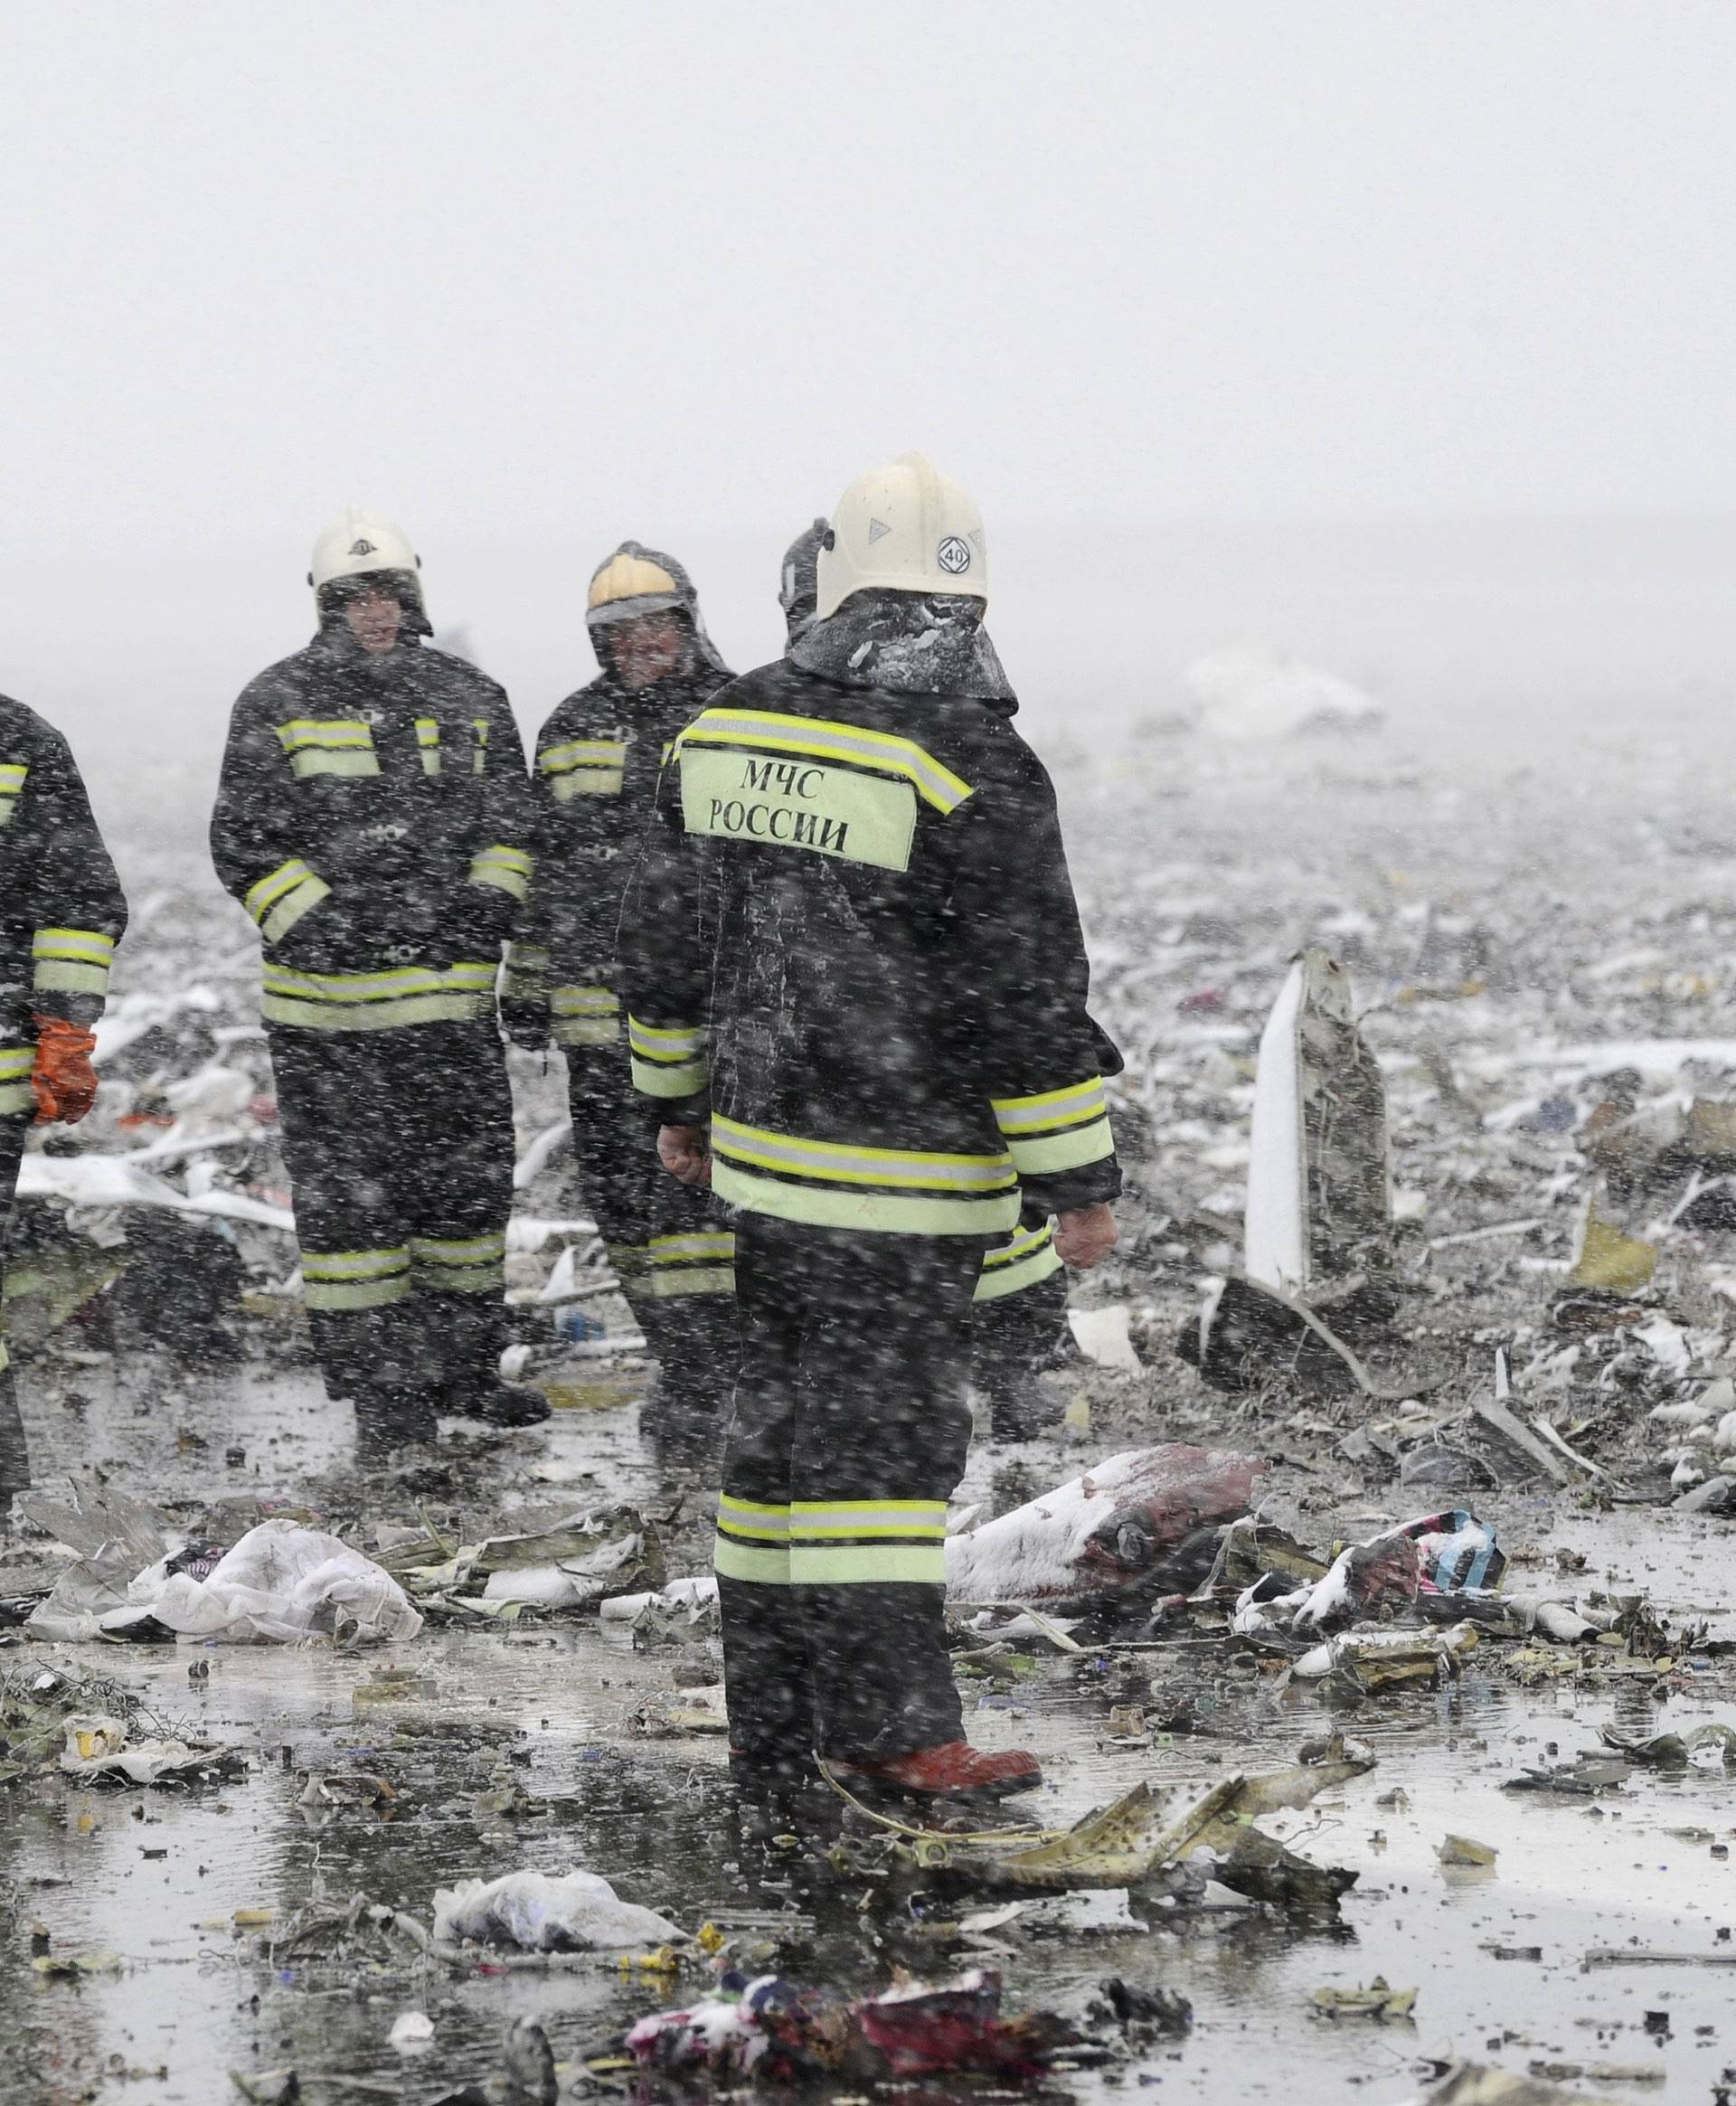 Raspao se na tisuće komadića: Užas na mjestu pada Boeinga